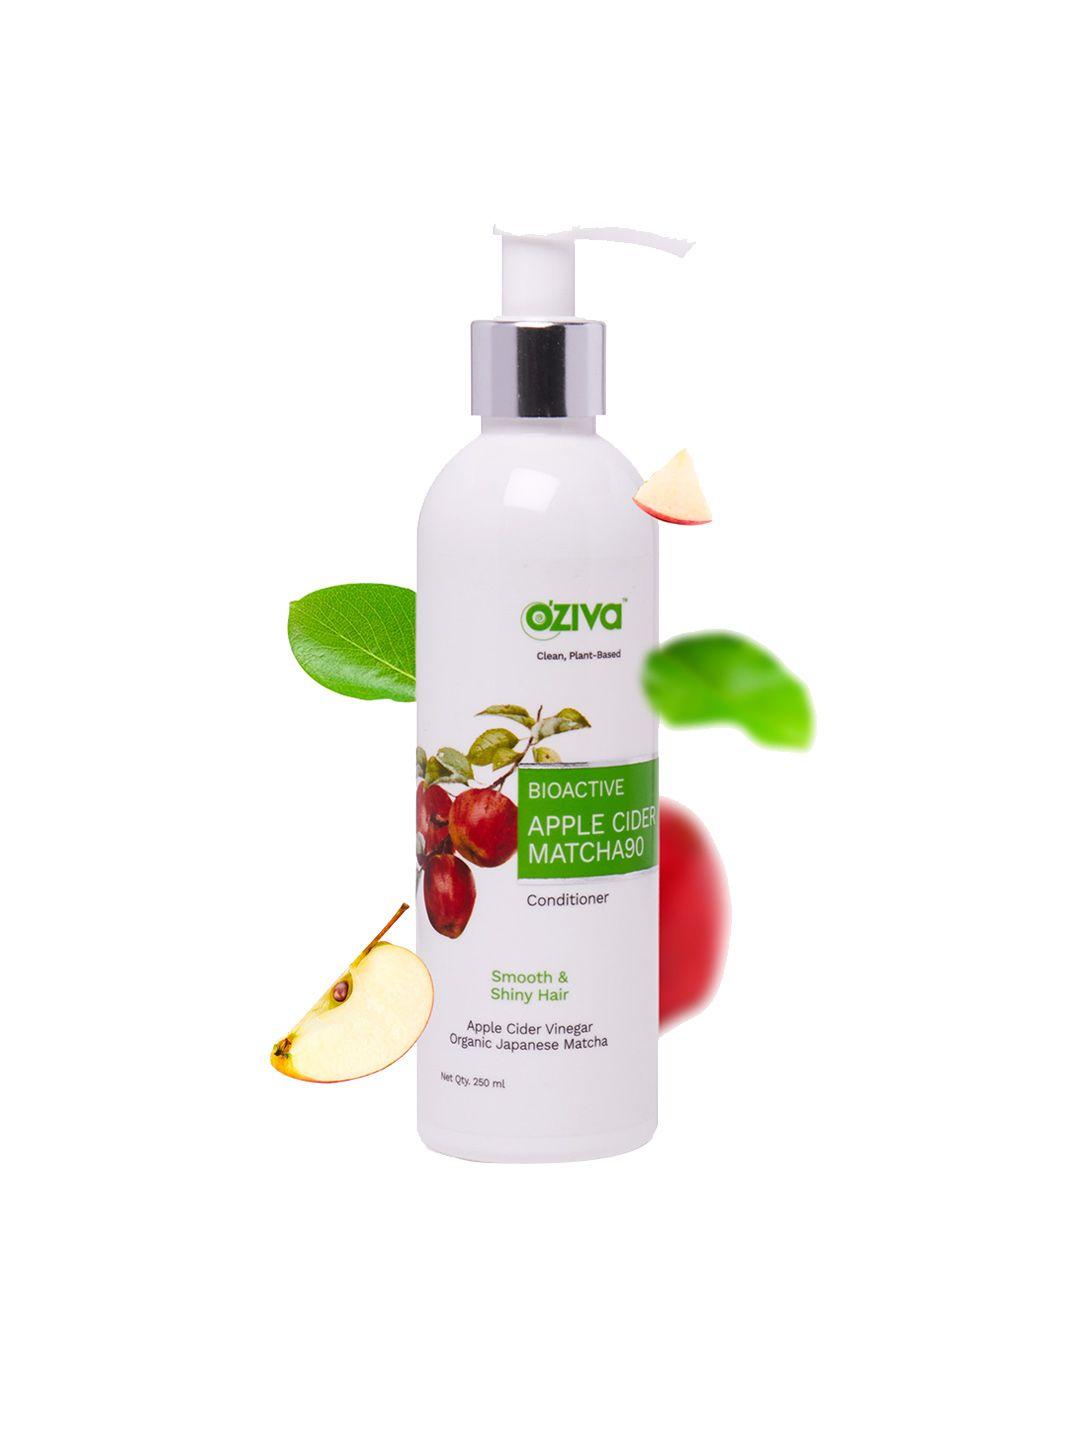 oziva-bioactive-apple-cider-vinegar-matcha90-conditioner-250ml